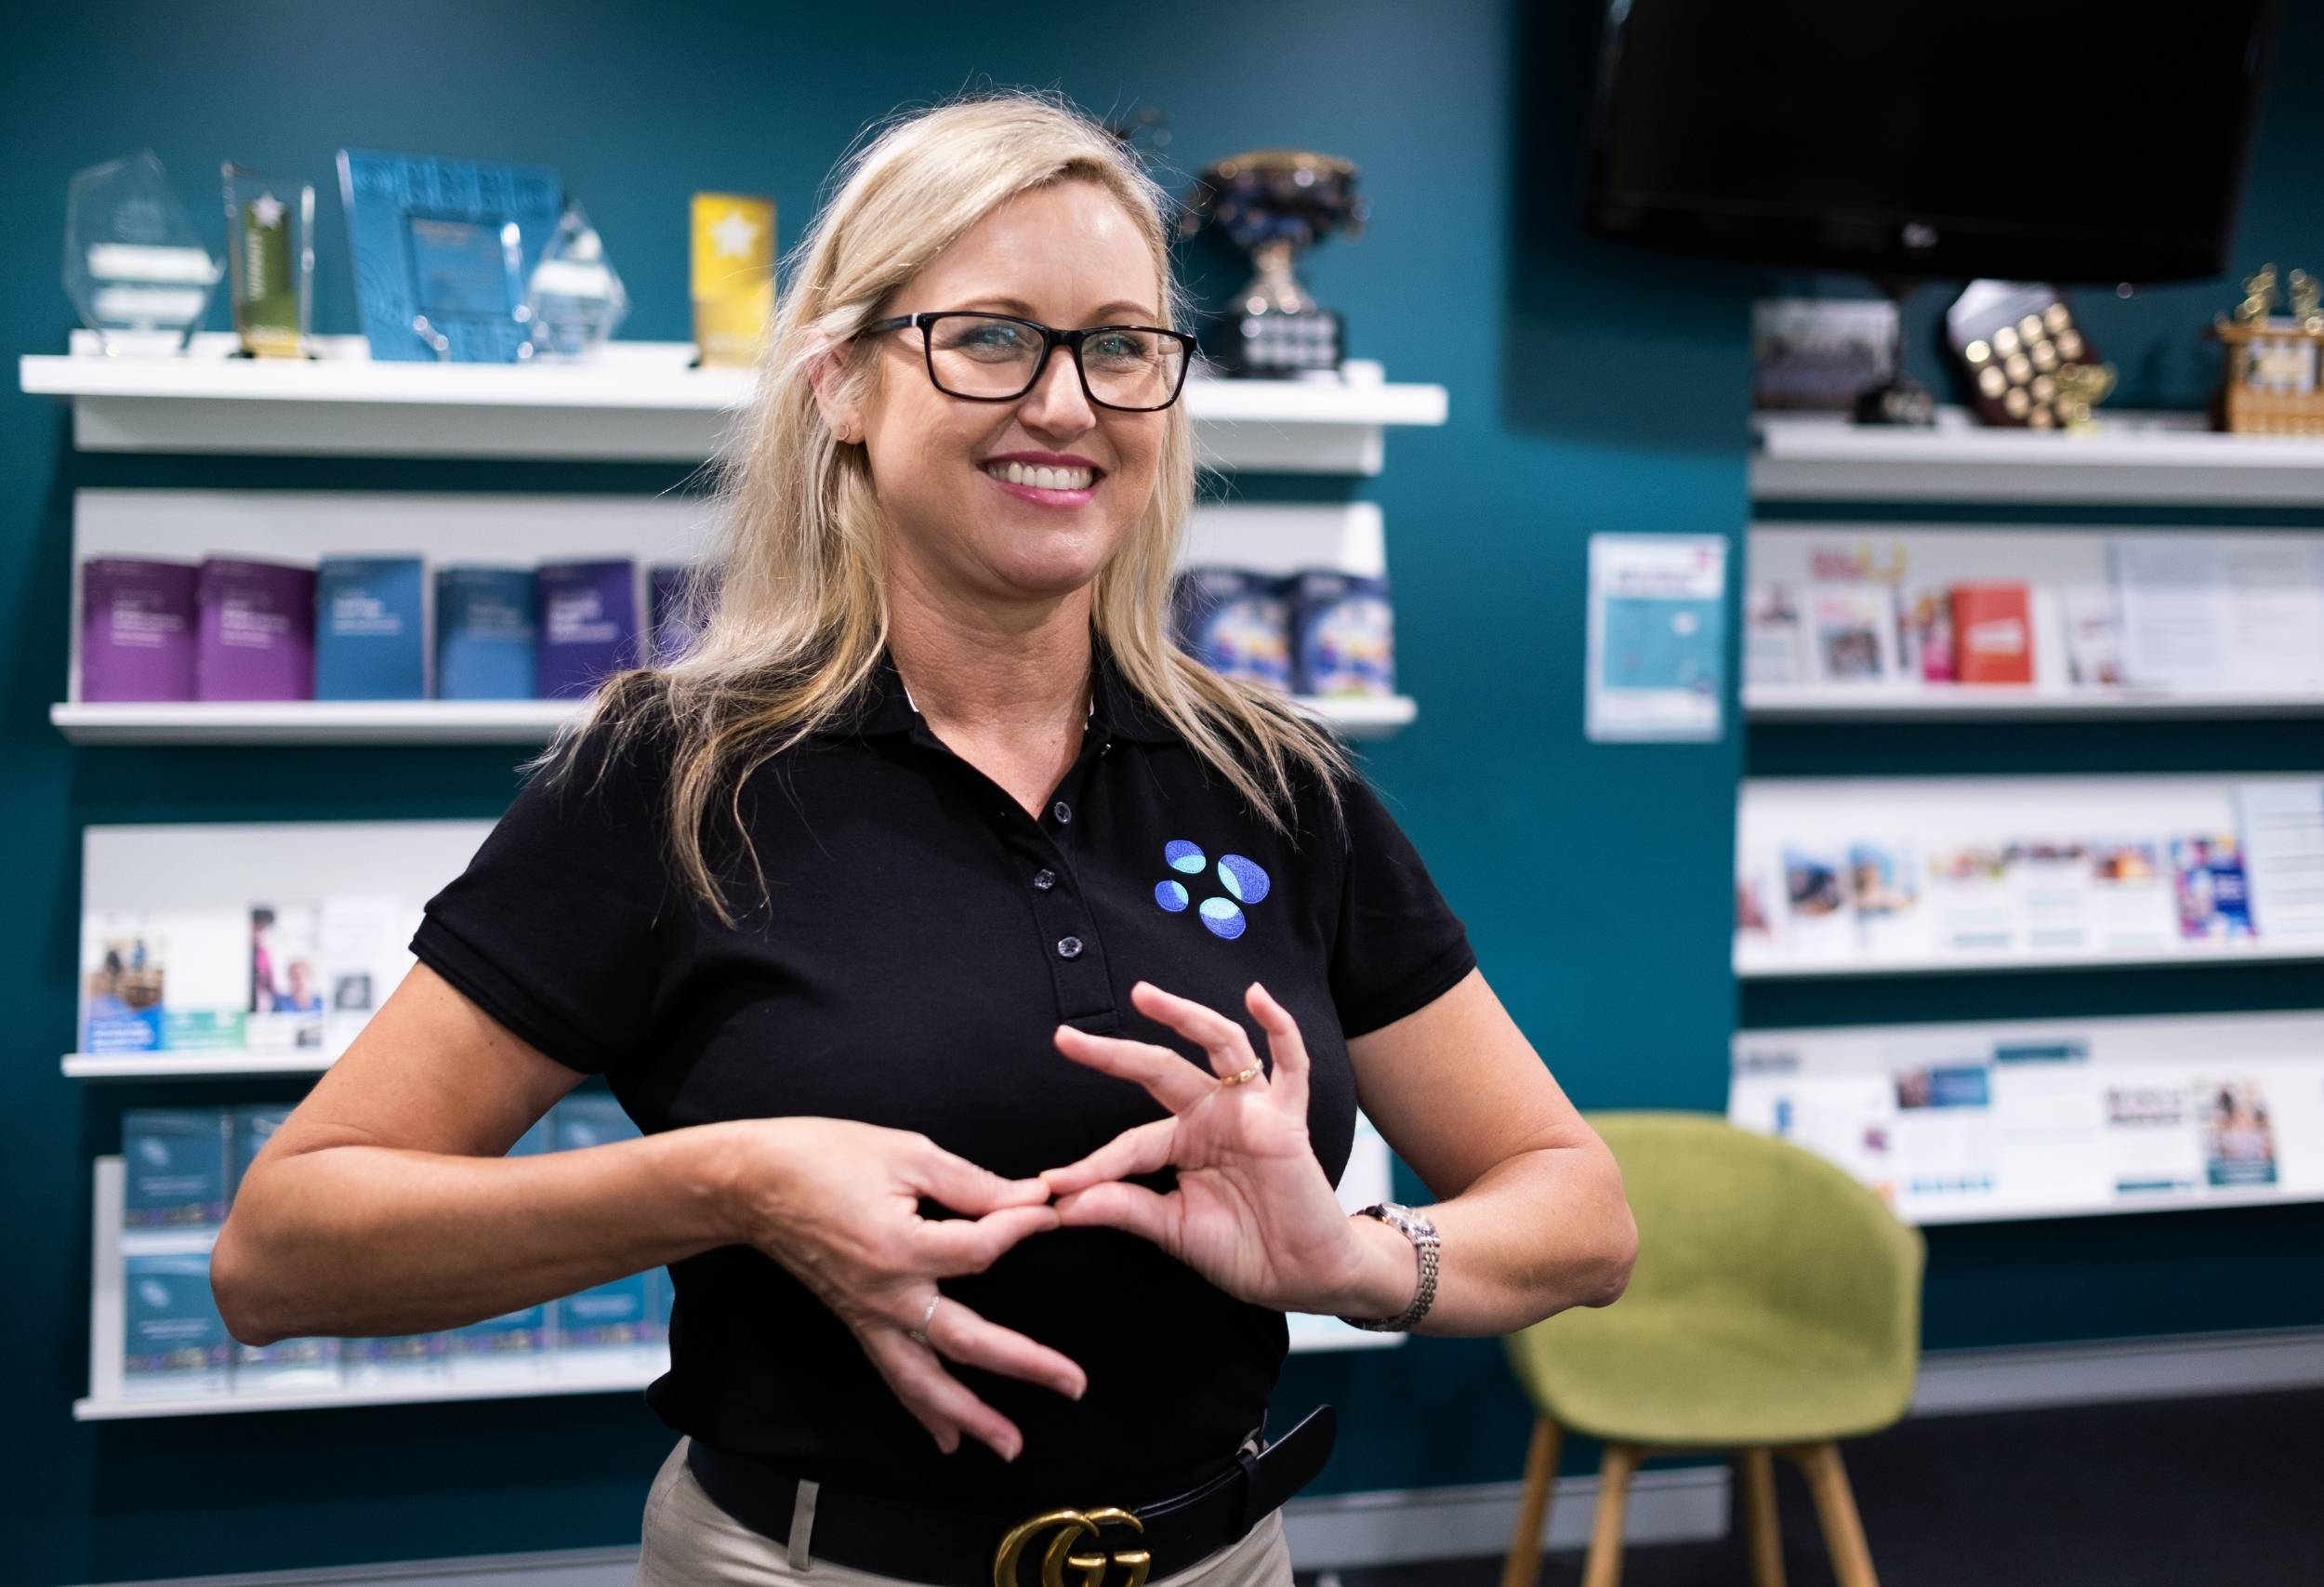 Auslan Interpreter signing 'interpreter' in Australian Sign Language